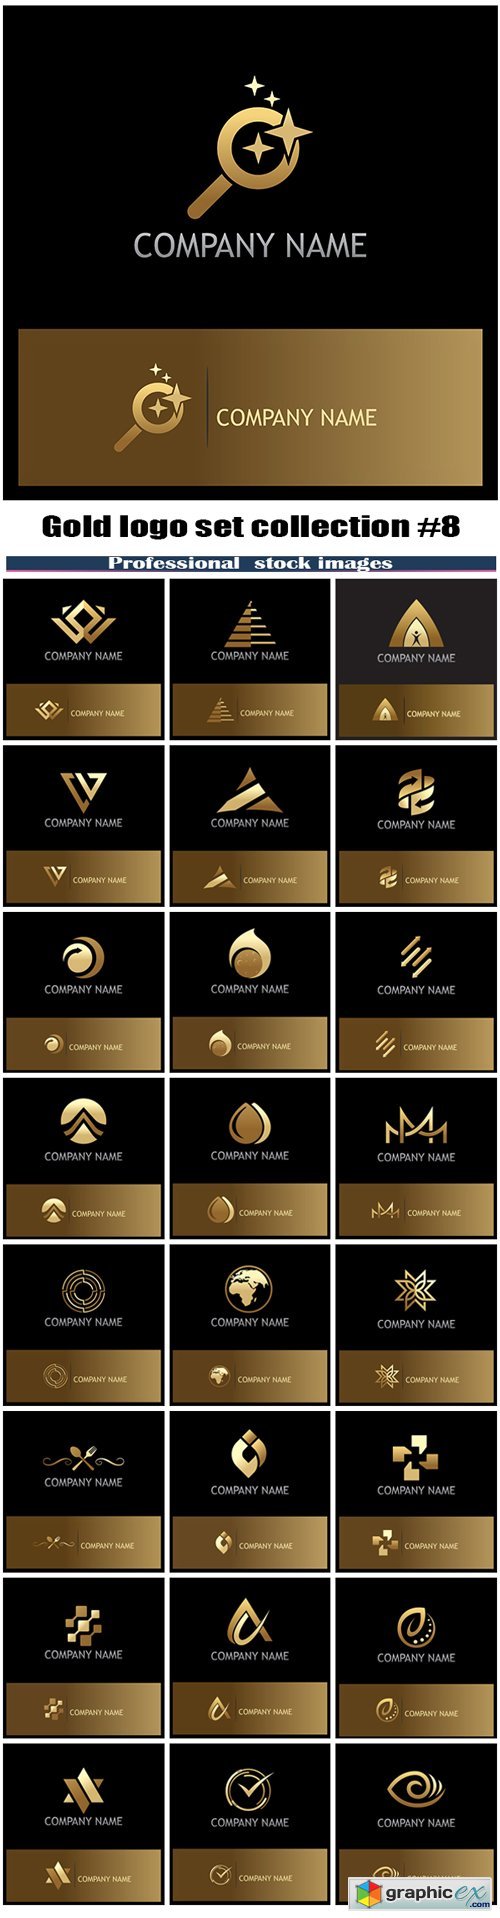 Gold logo set collection #8